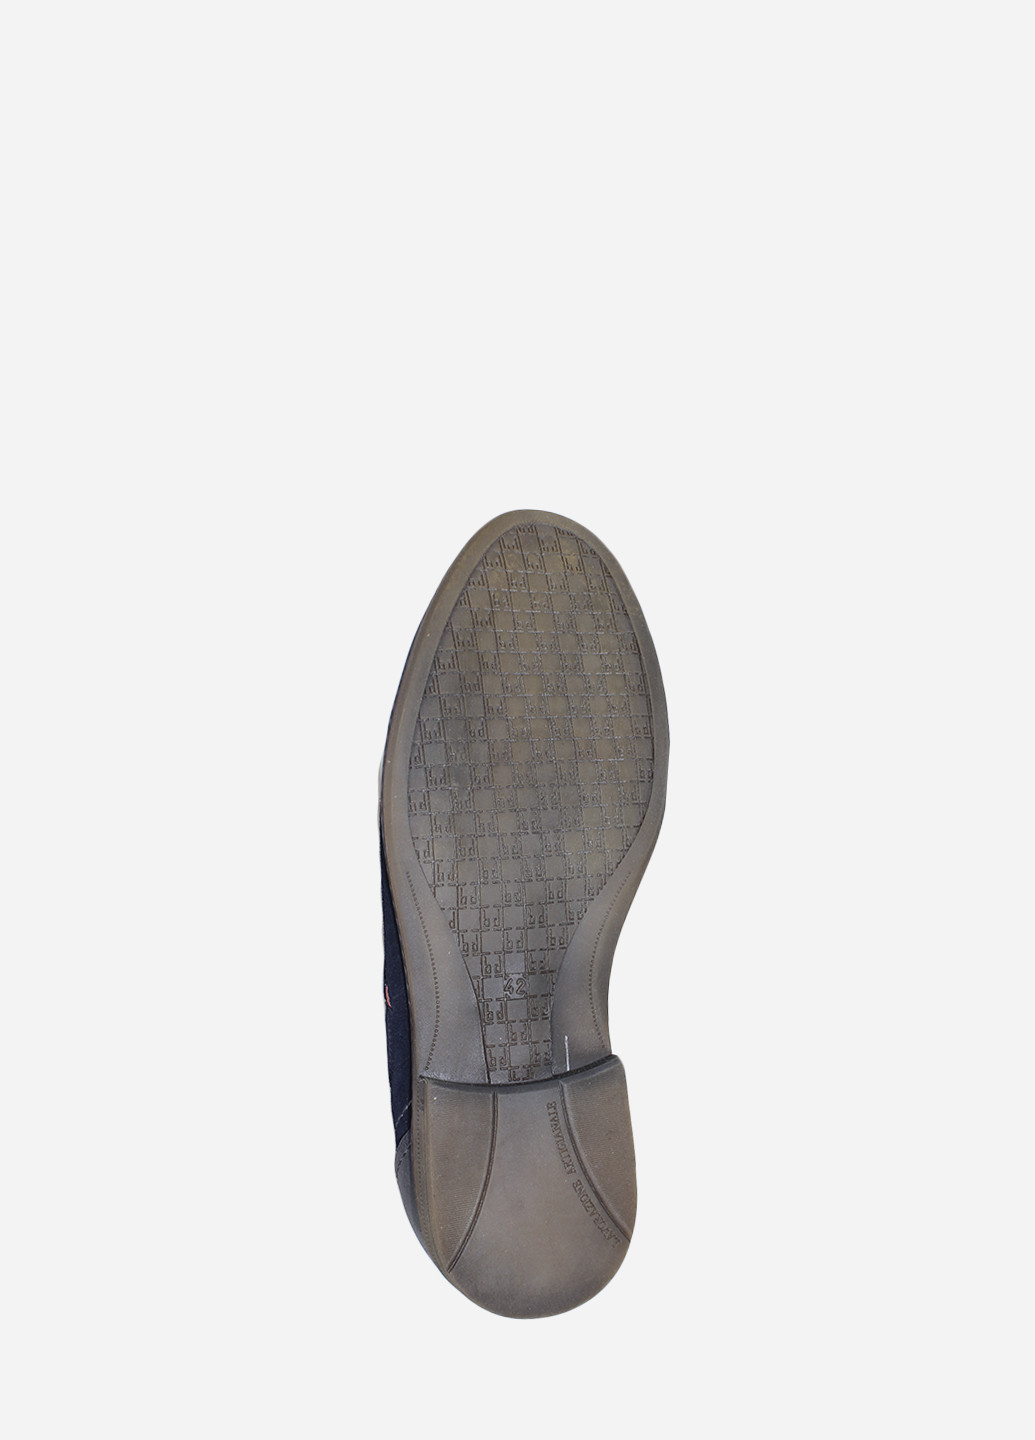 Синие осенние ботинки rv3515-098-11 синий Veber Design